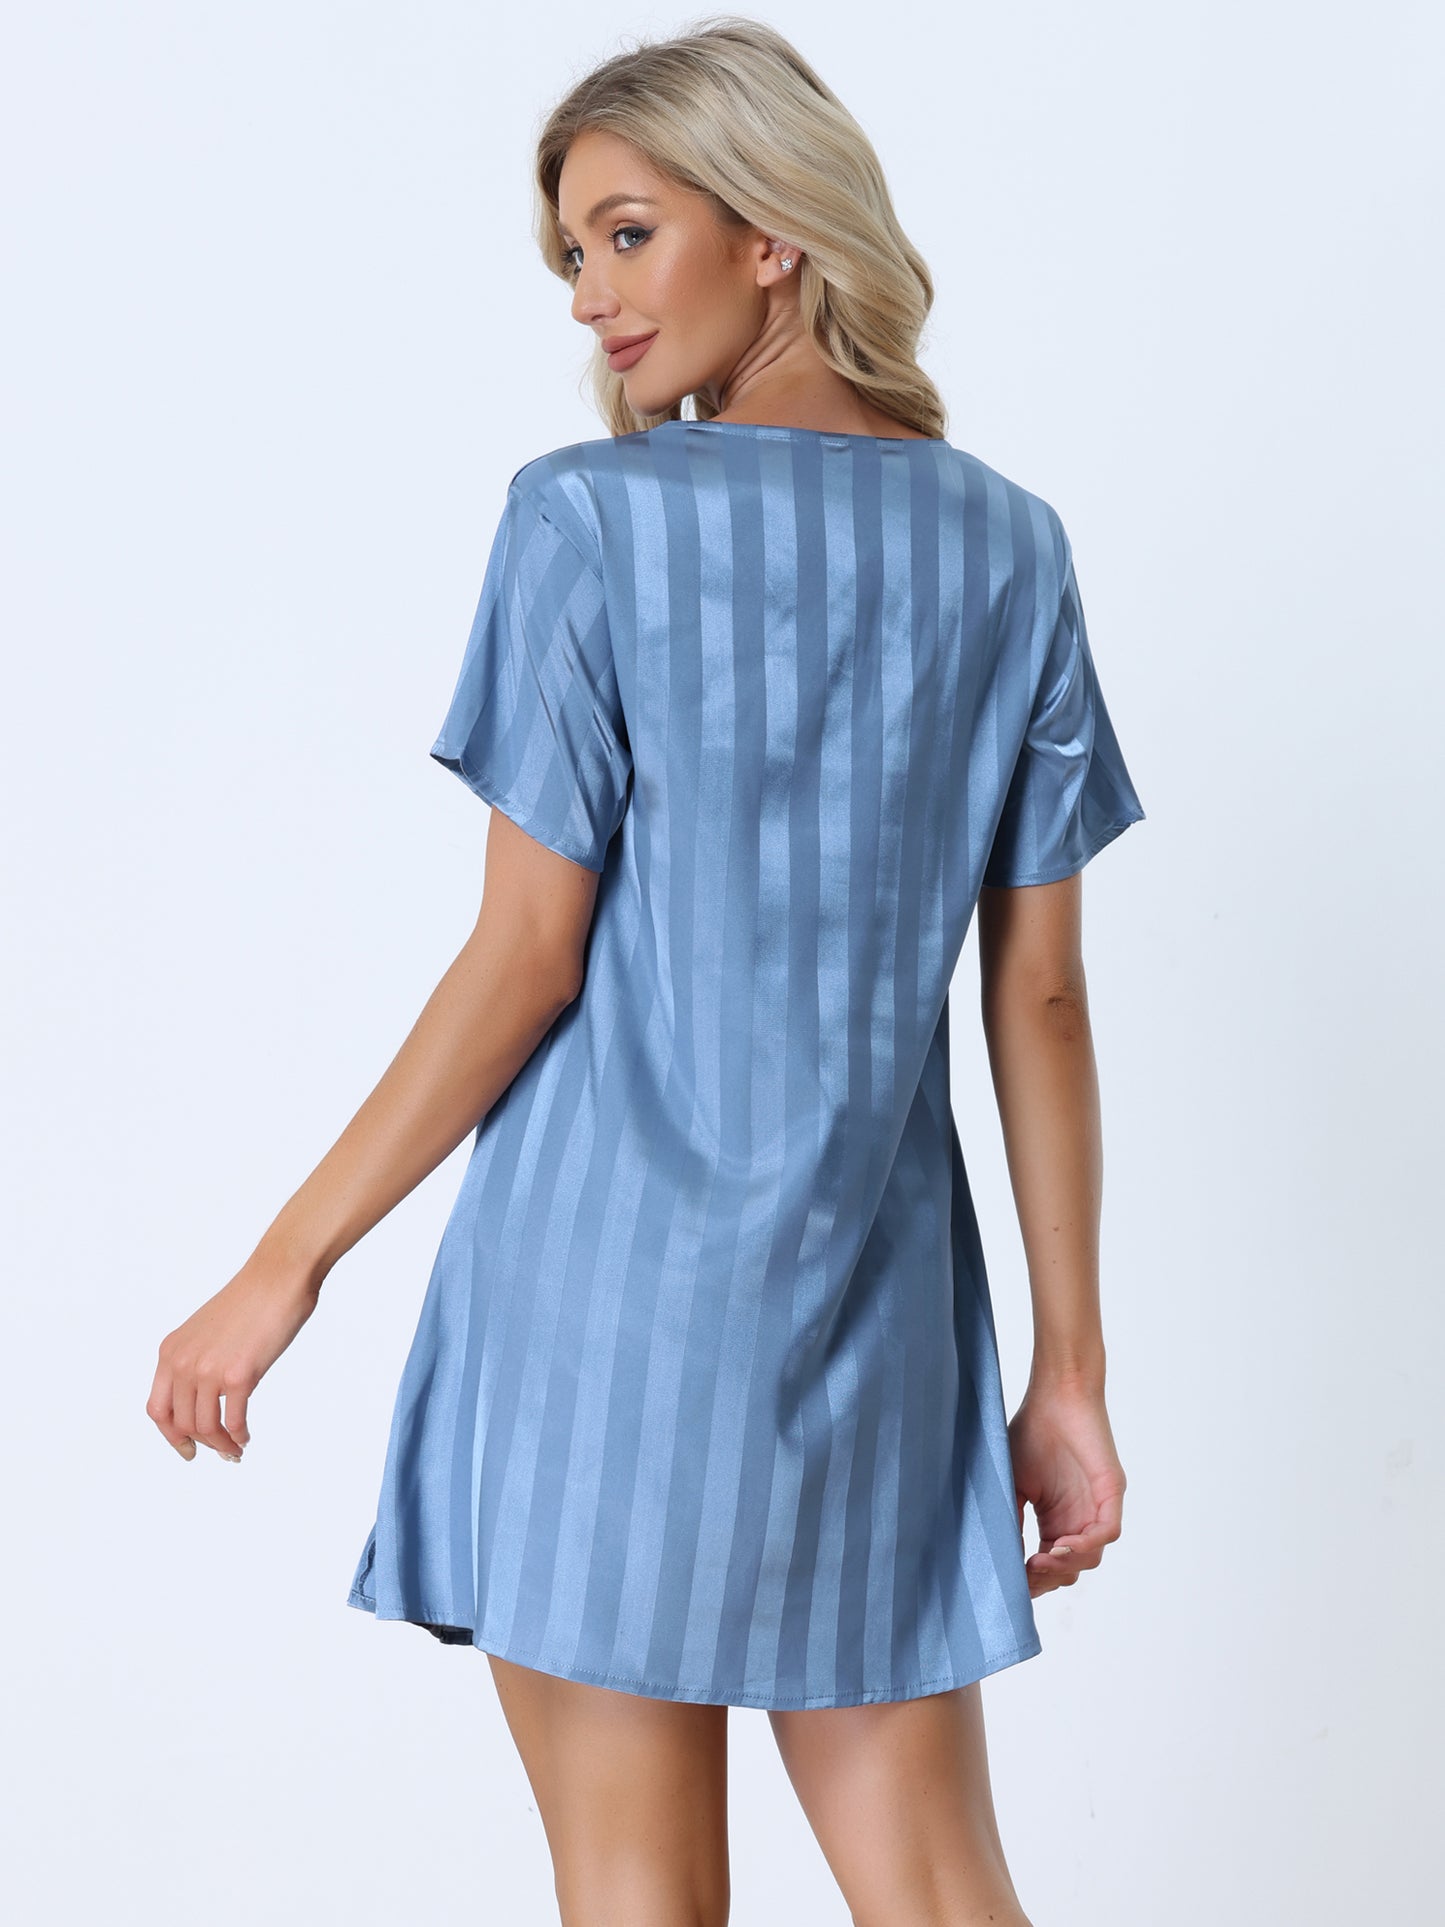 cheibear Pajamas Satin Dress Nightshirt Short Sleeves Lounge Sleepwear Nightgown Light Blue